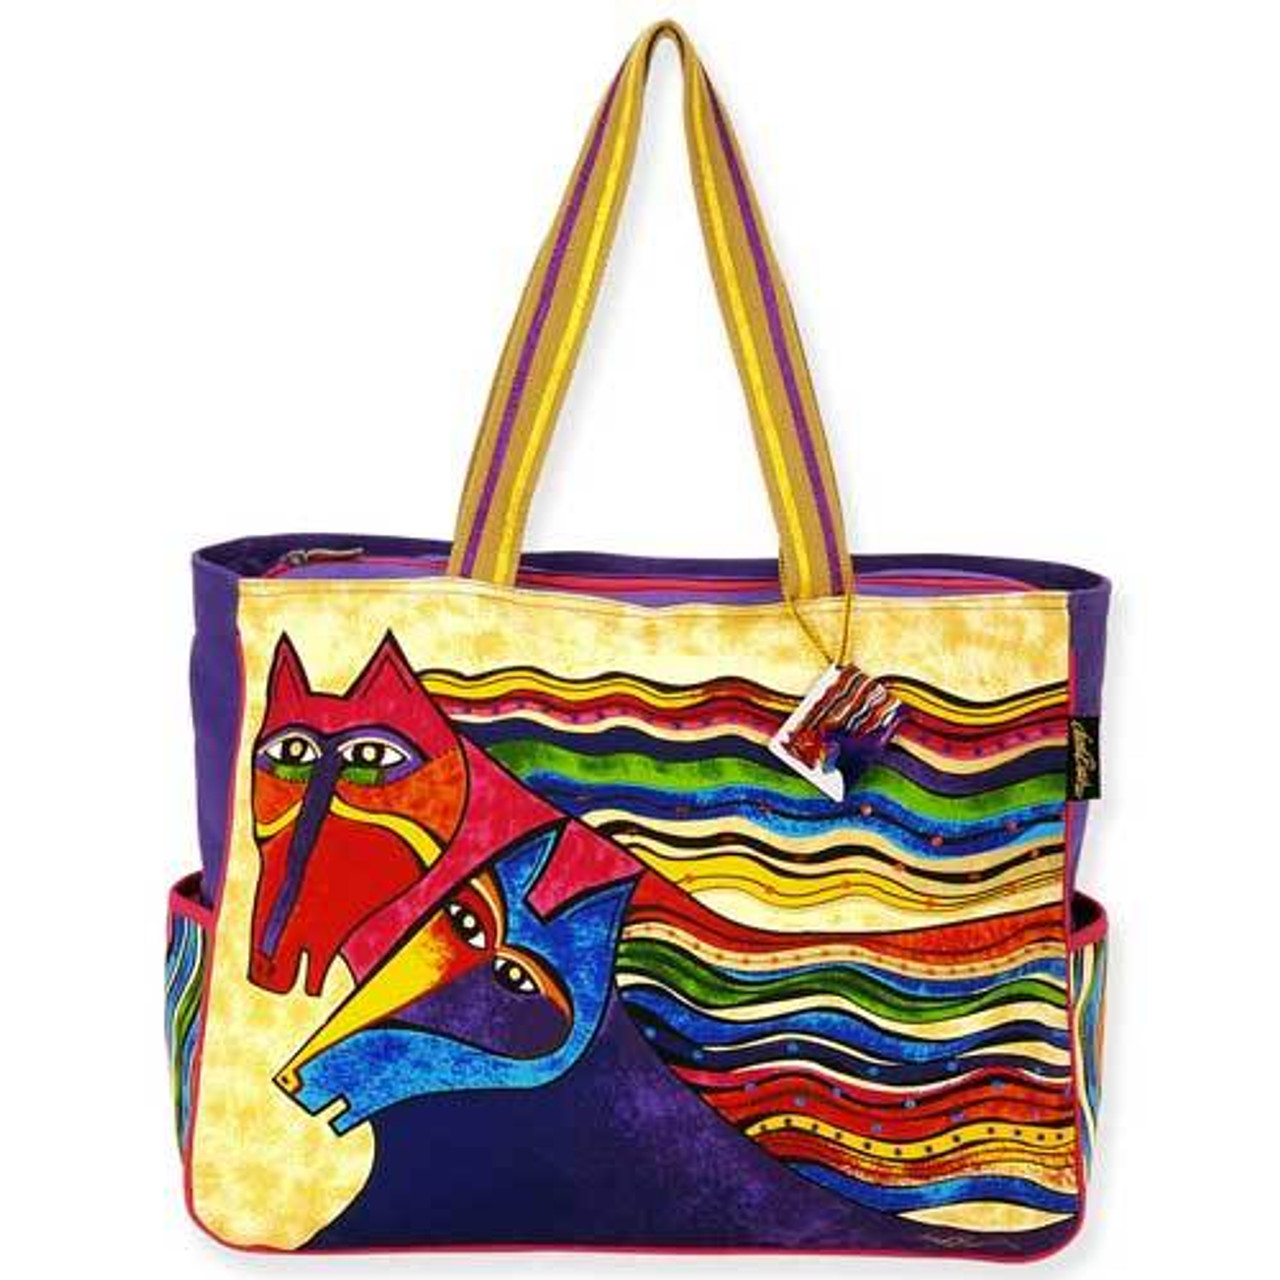 Laurel Burch Small Canvas Purse Tote Bag Handbag Global Spirit | eBay